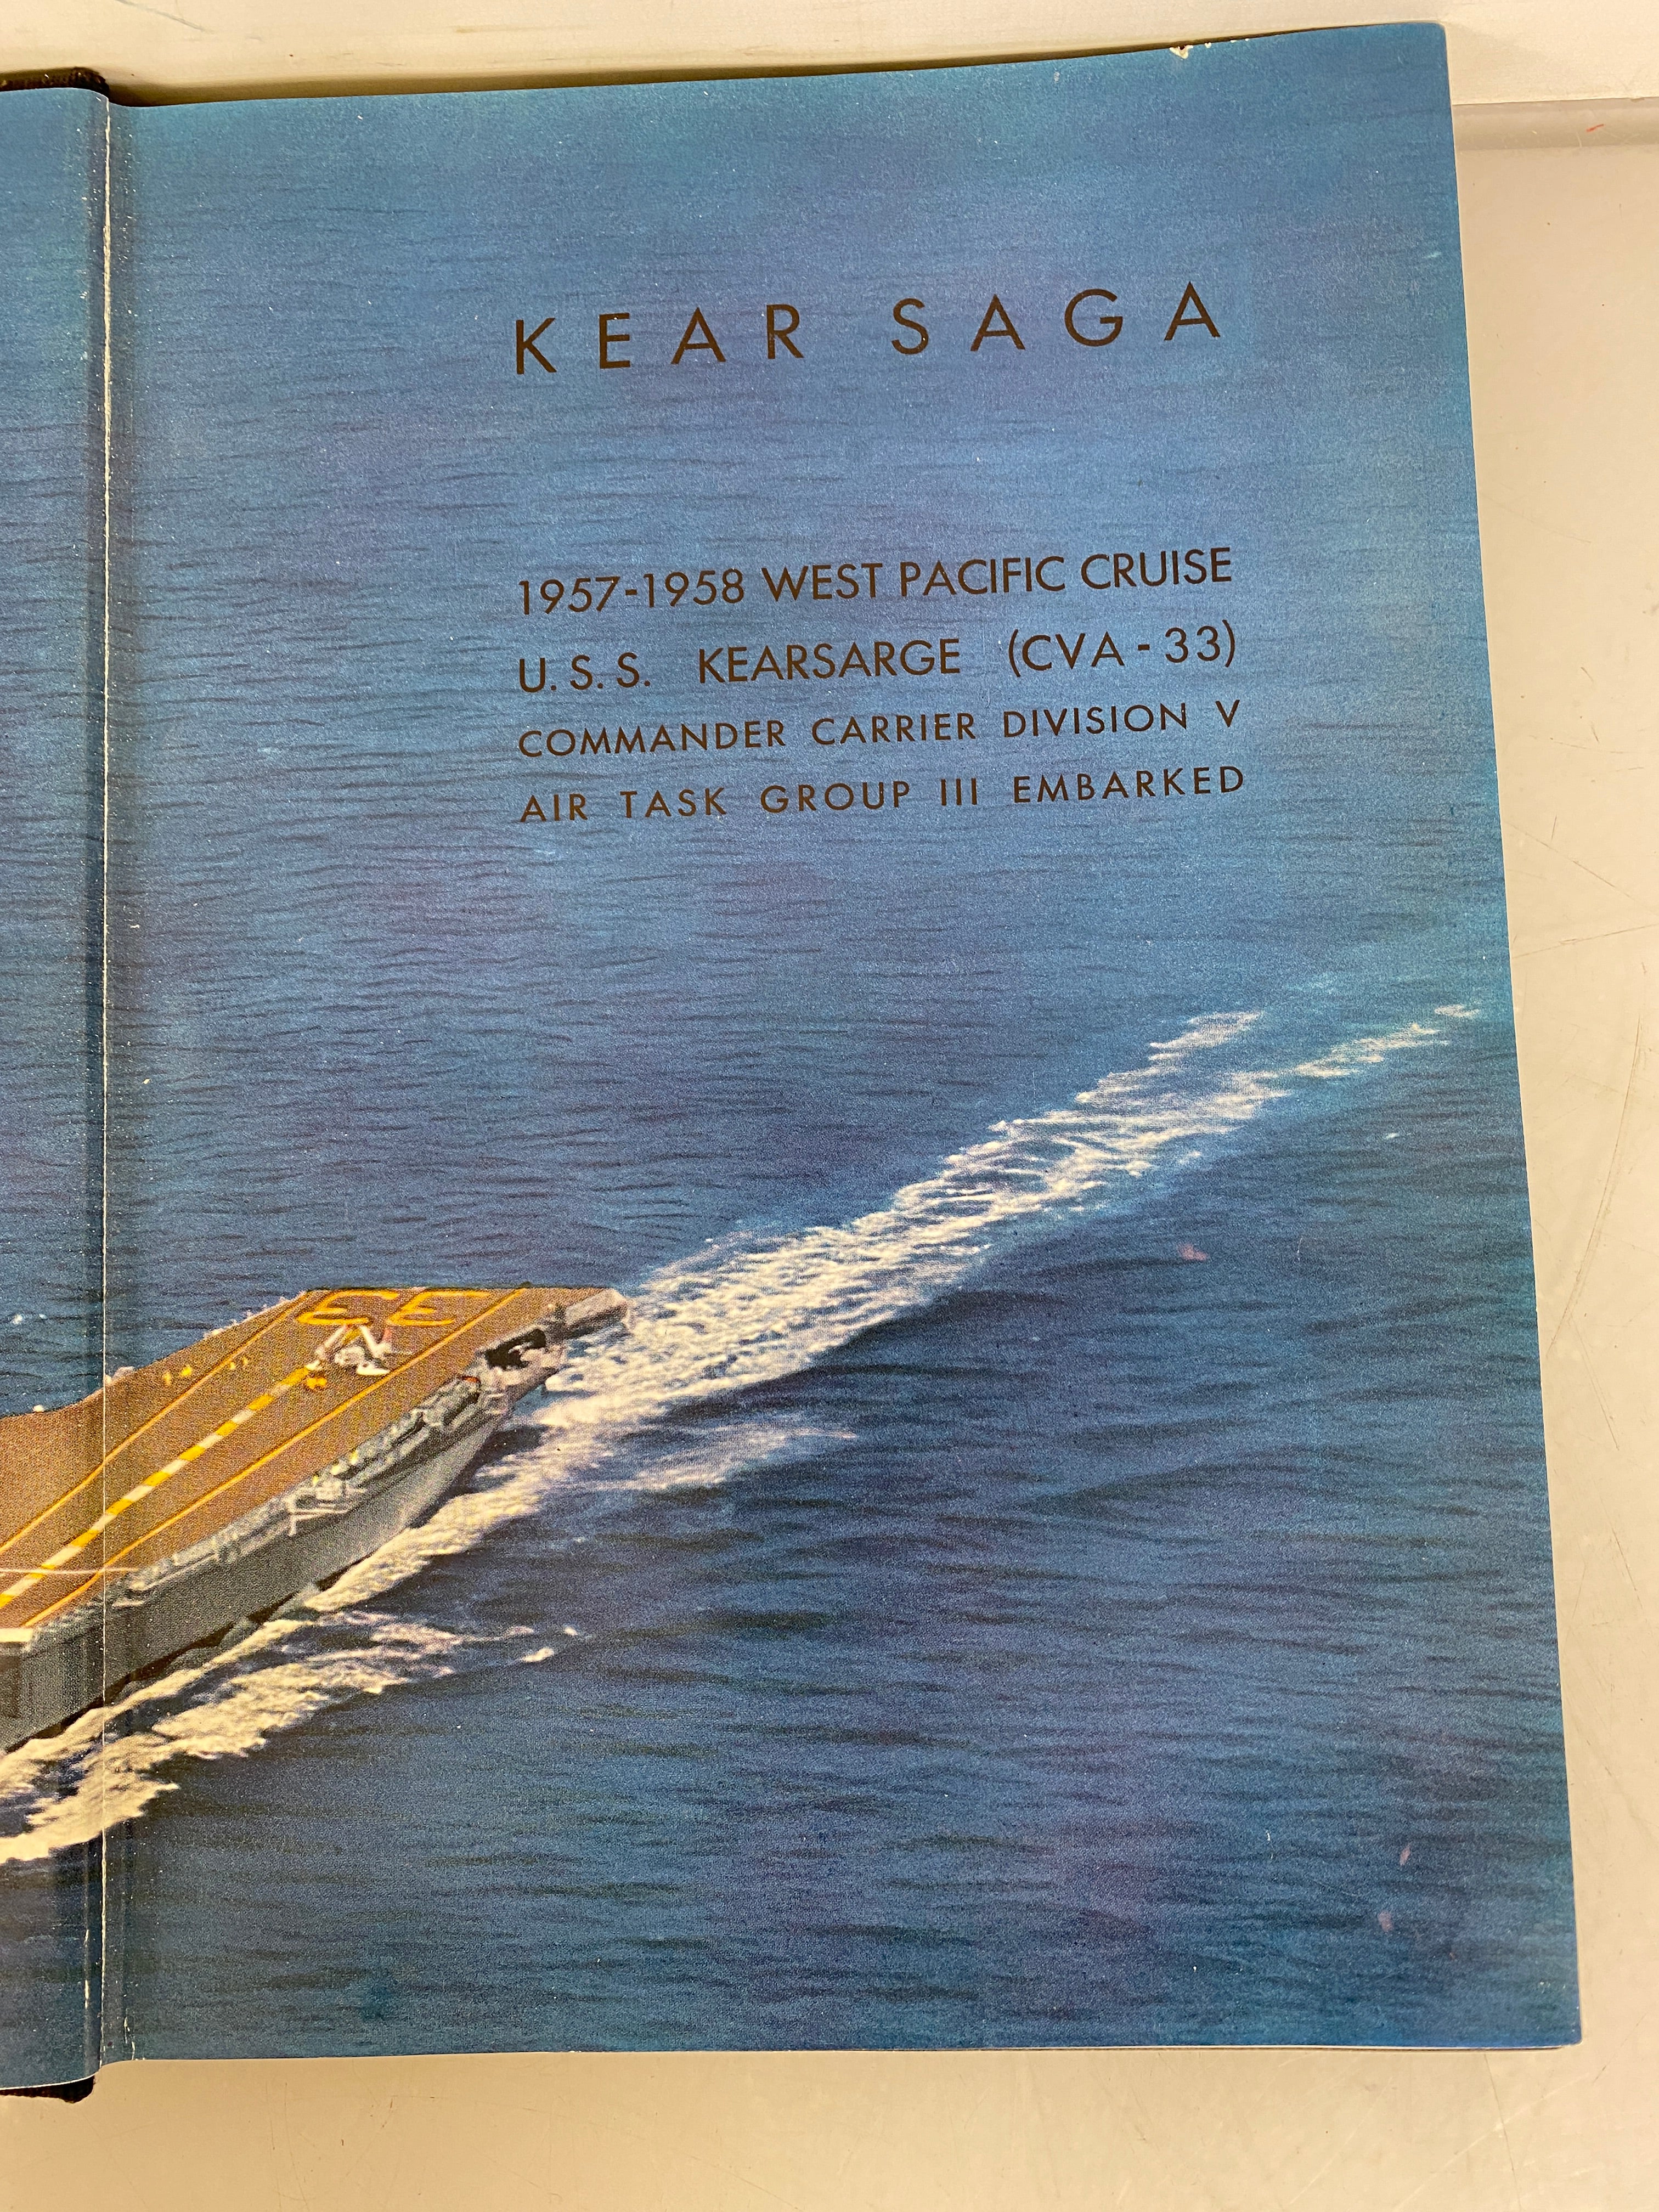 Kear Saga United States Navy USS Kearsarge (CVA-33) 1957-1958 West Pacific Cruise Yearbook